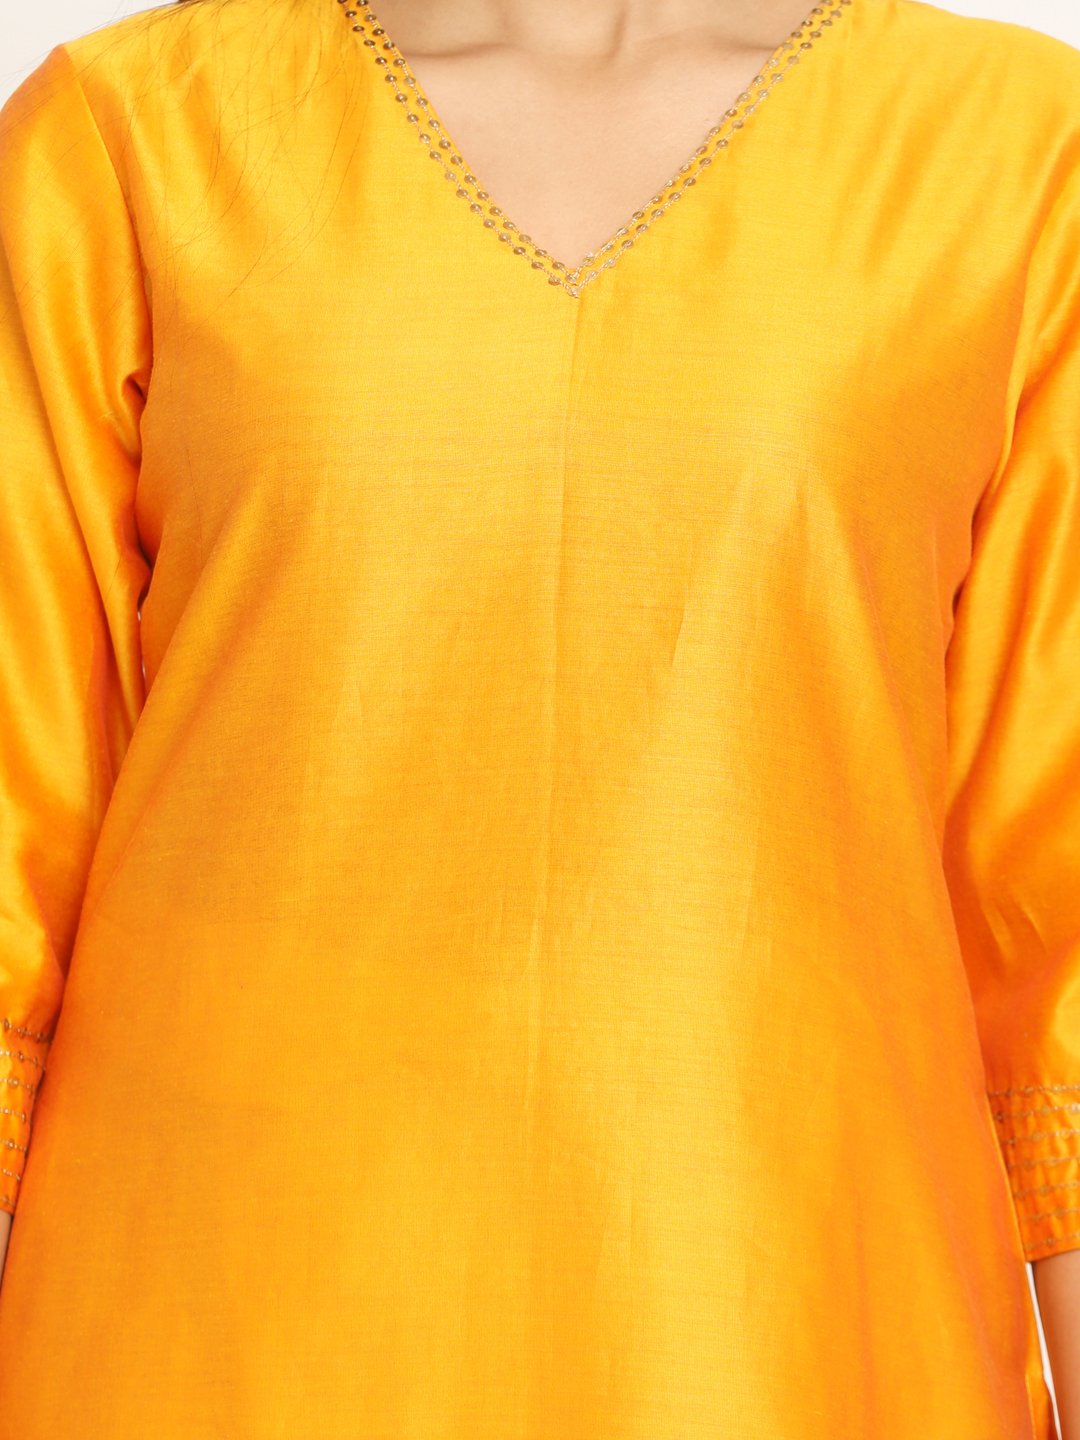 Nakshi Yellow Solid Handloom Straight Kurti